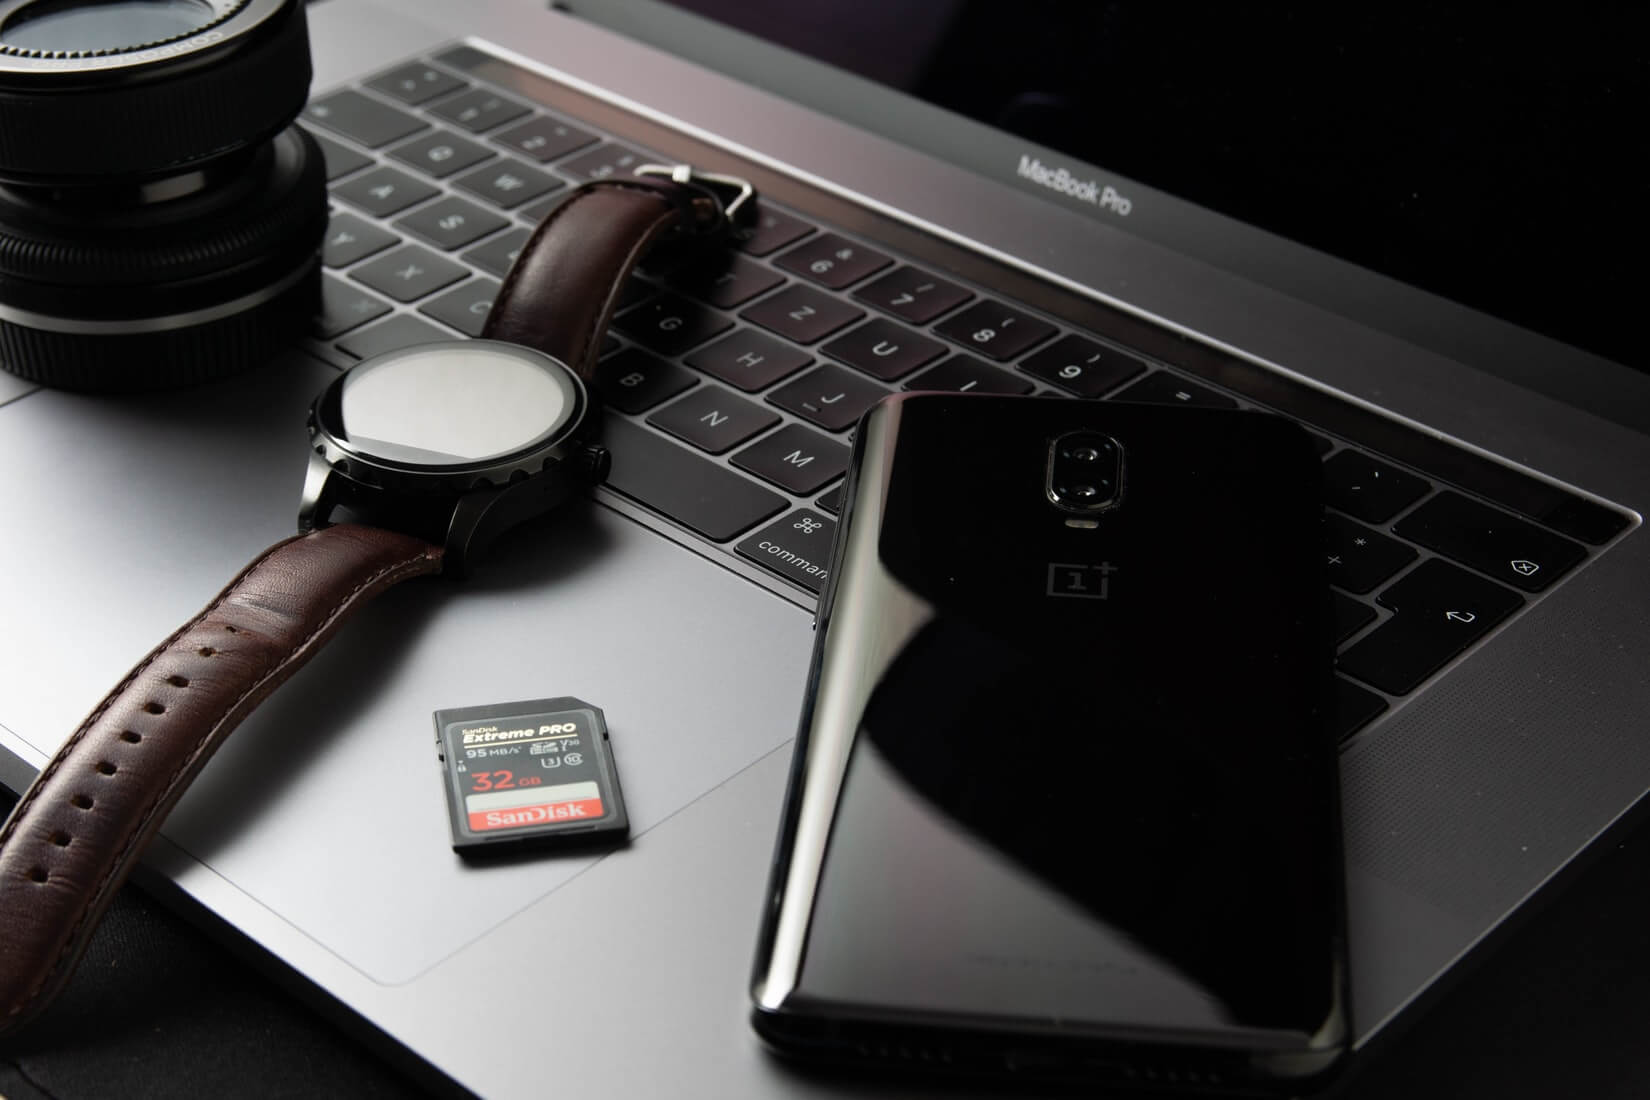 A Camera Lens | A Macbook pro | Watch | 32 GB SD Card | Oneplus Smartphone